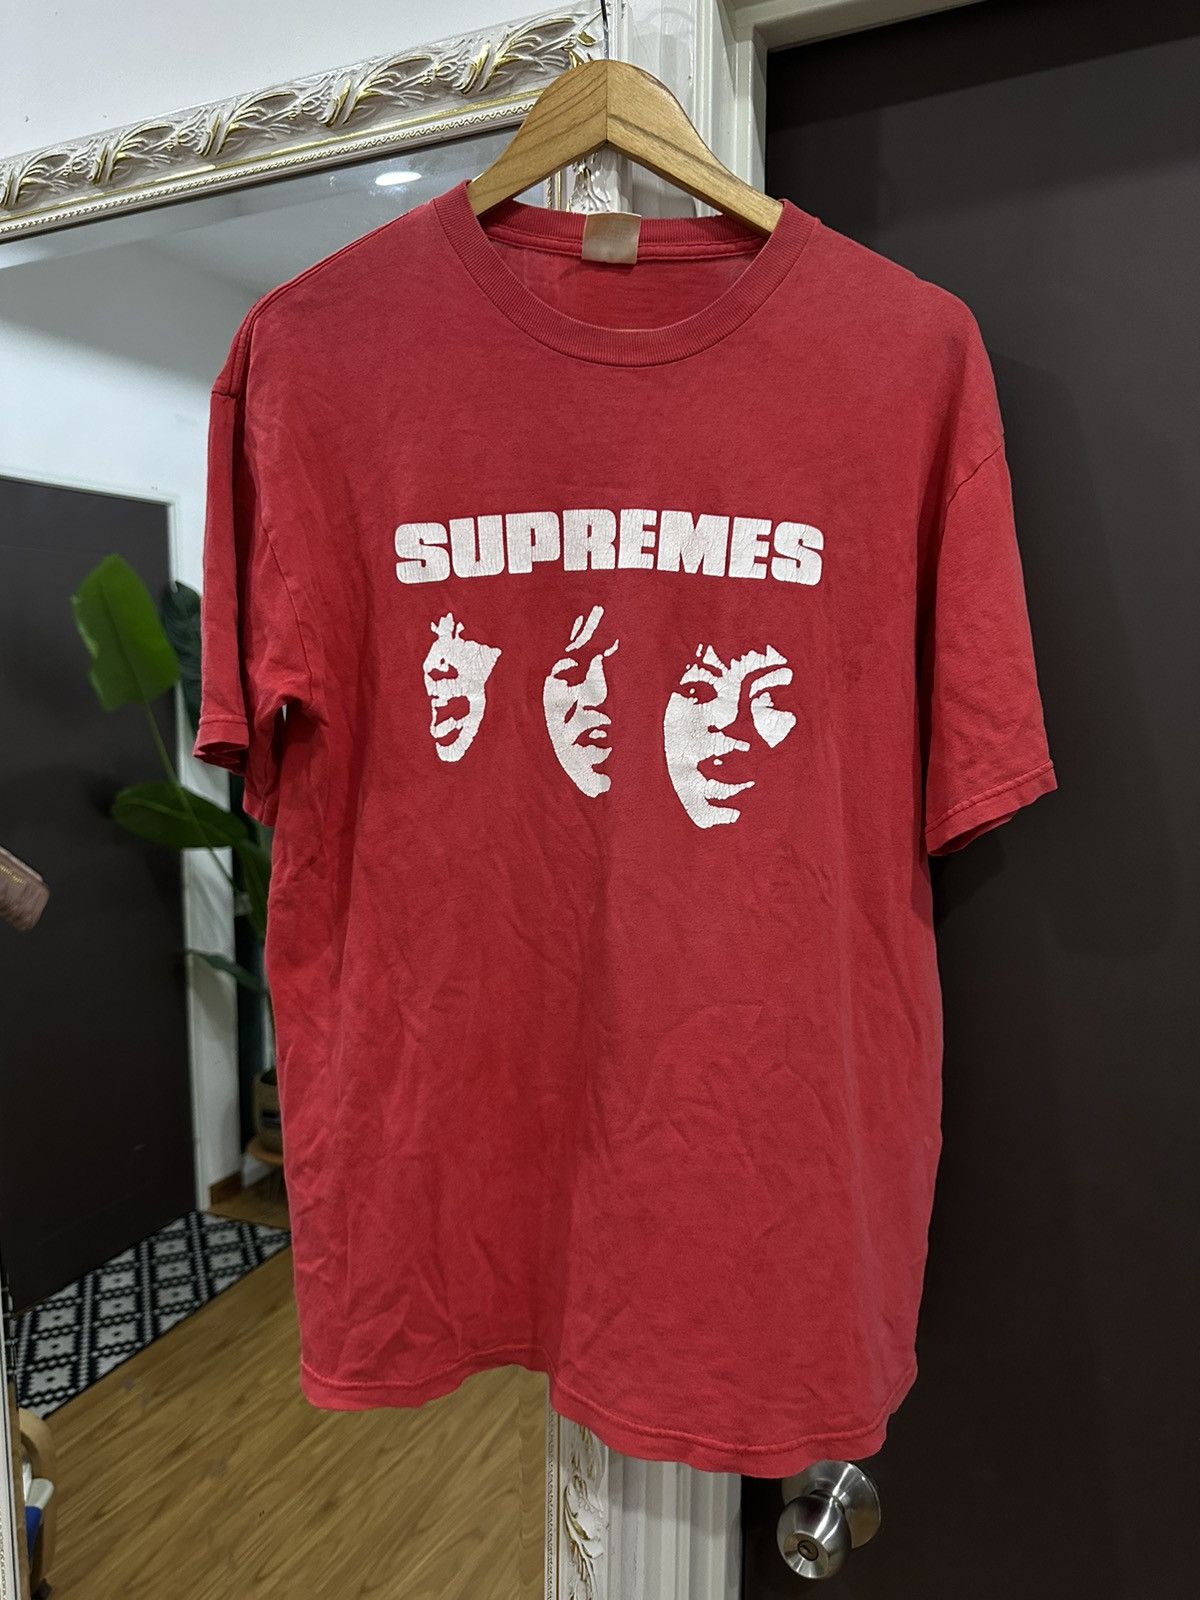 SS01 The Supremes Tee - 2